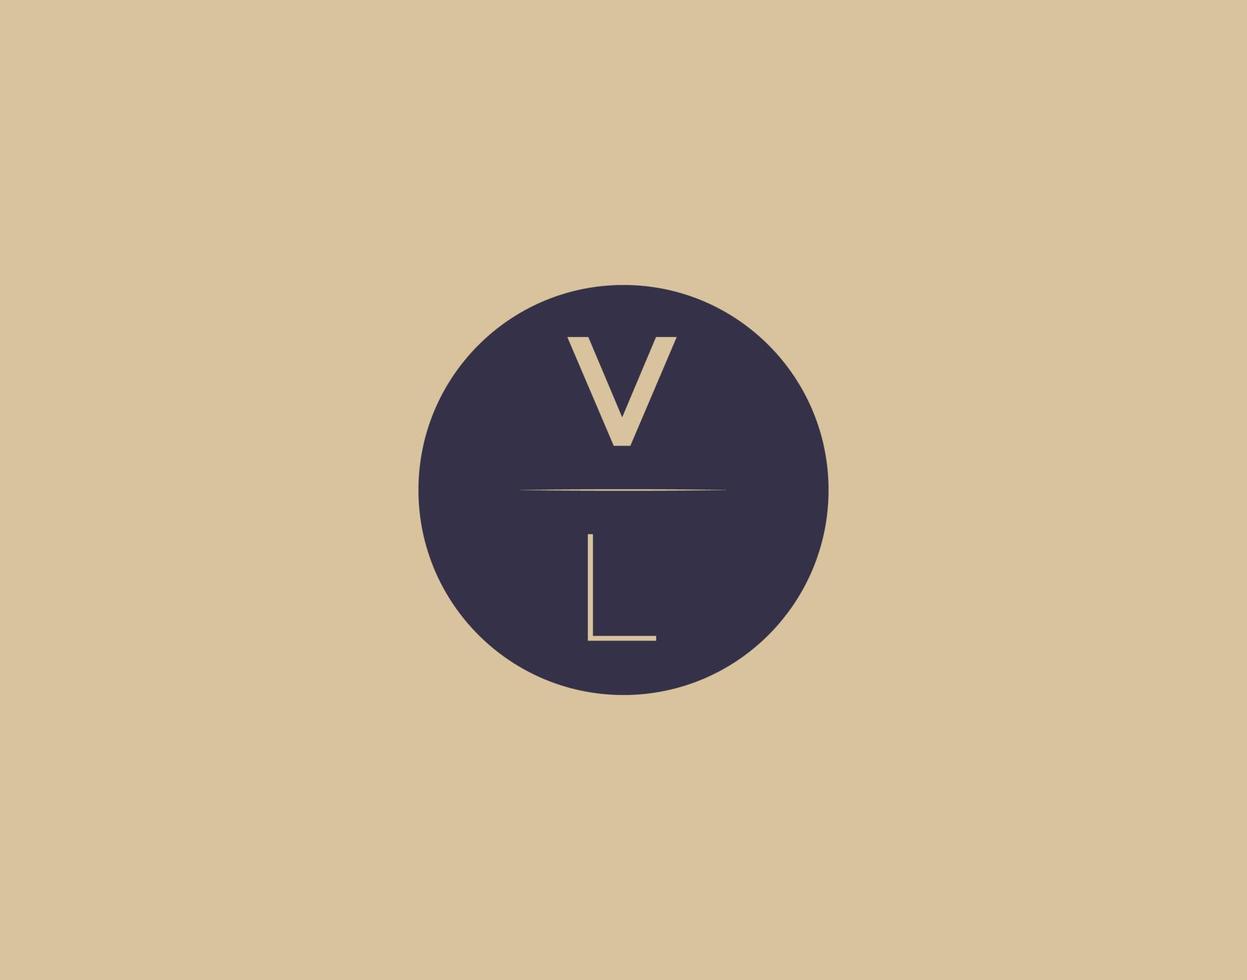 VL letter modern elegant logo design vector images